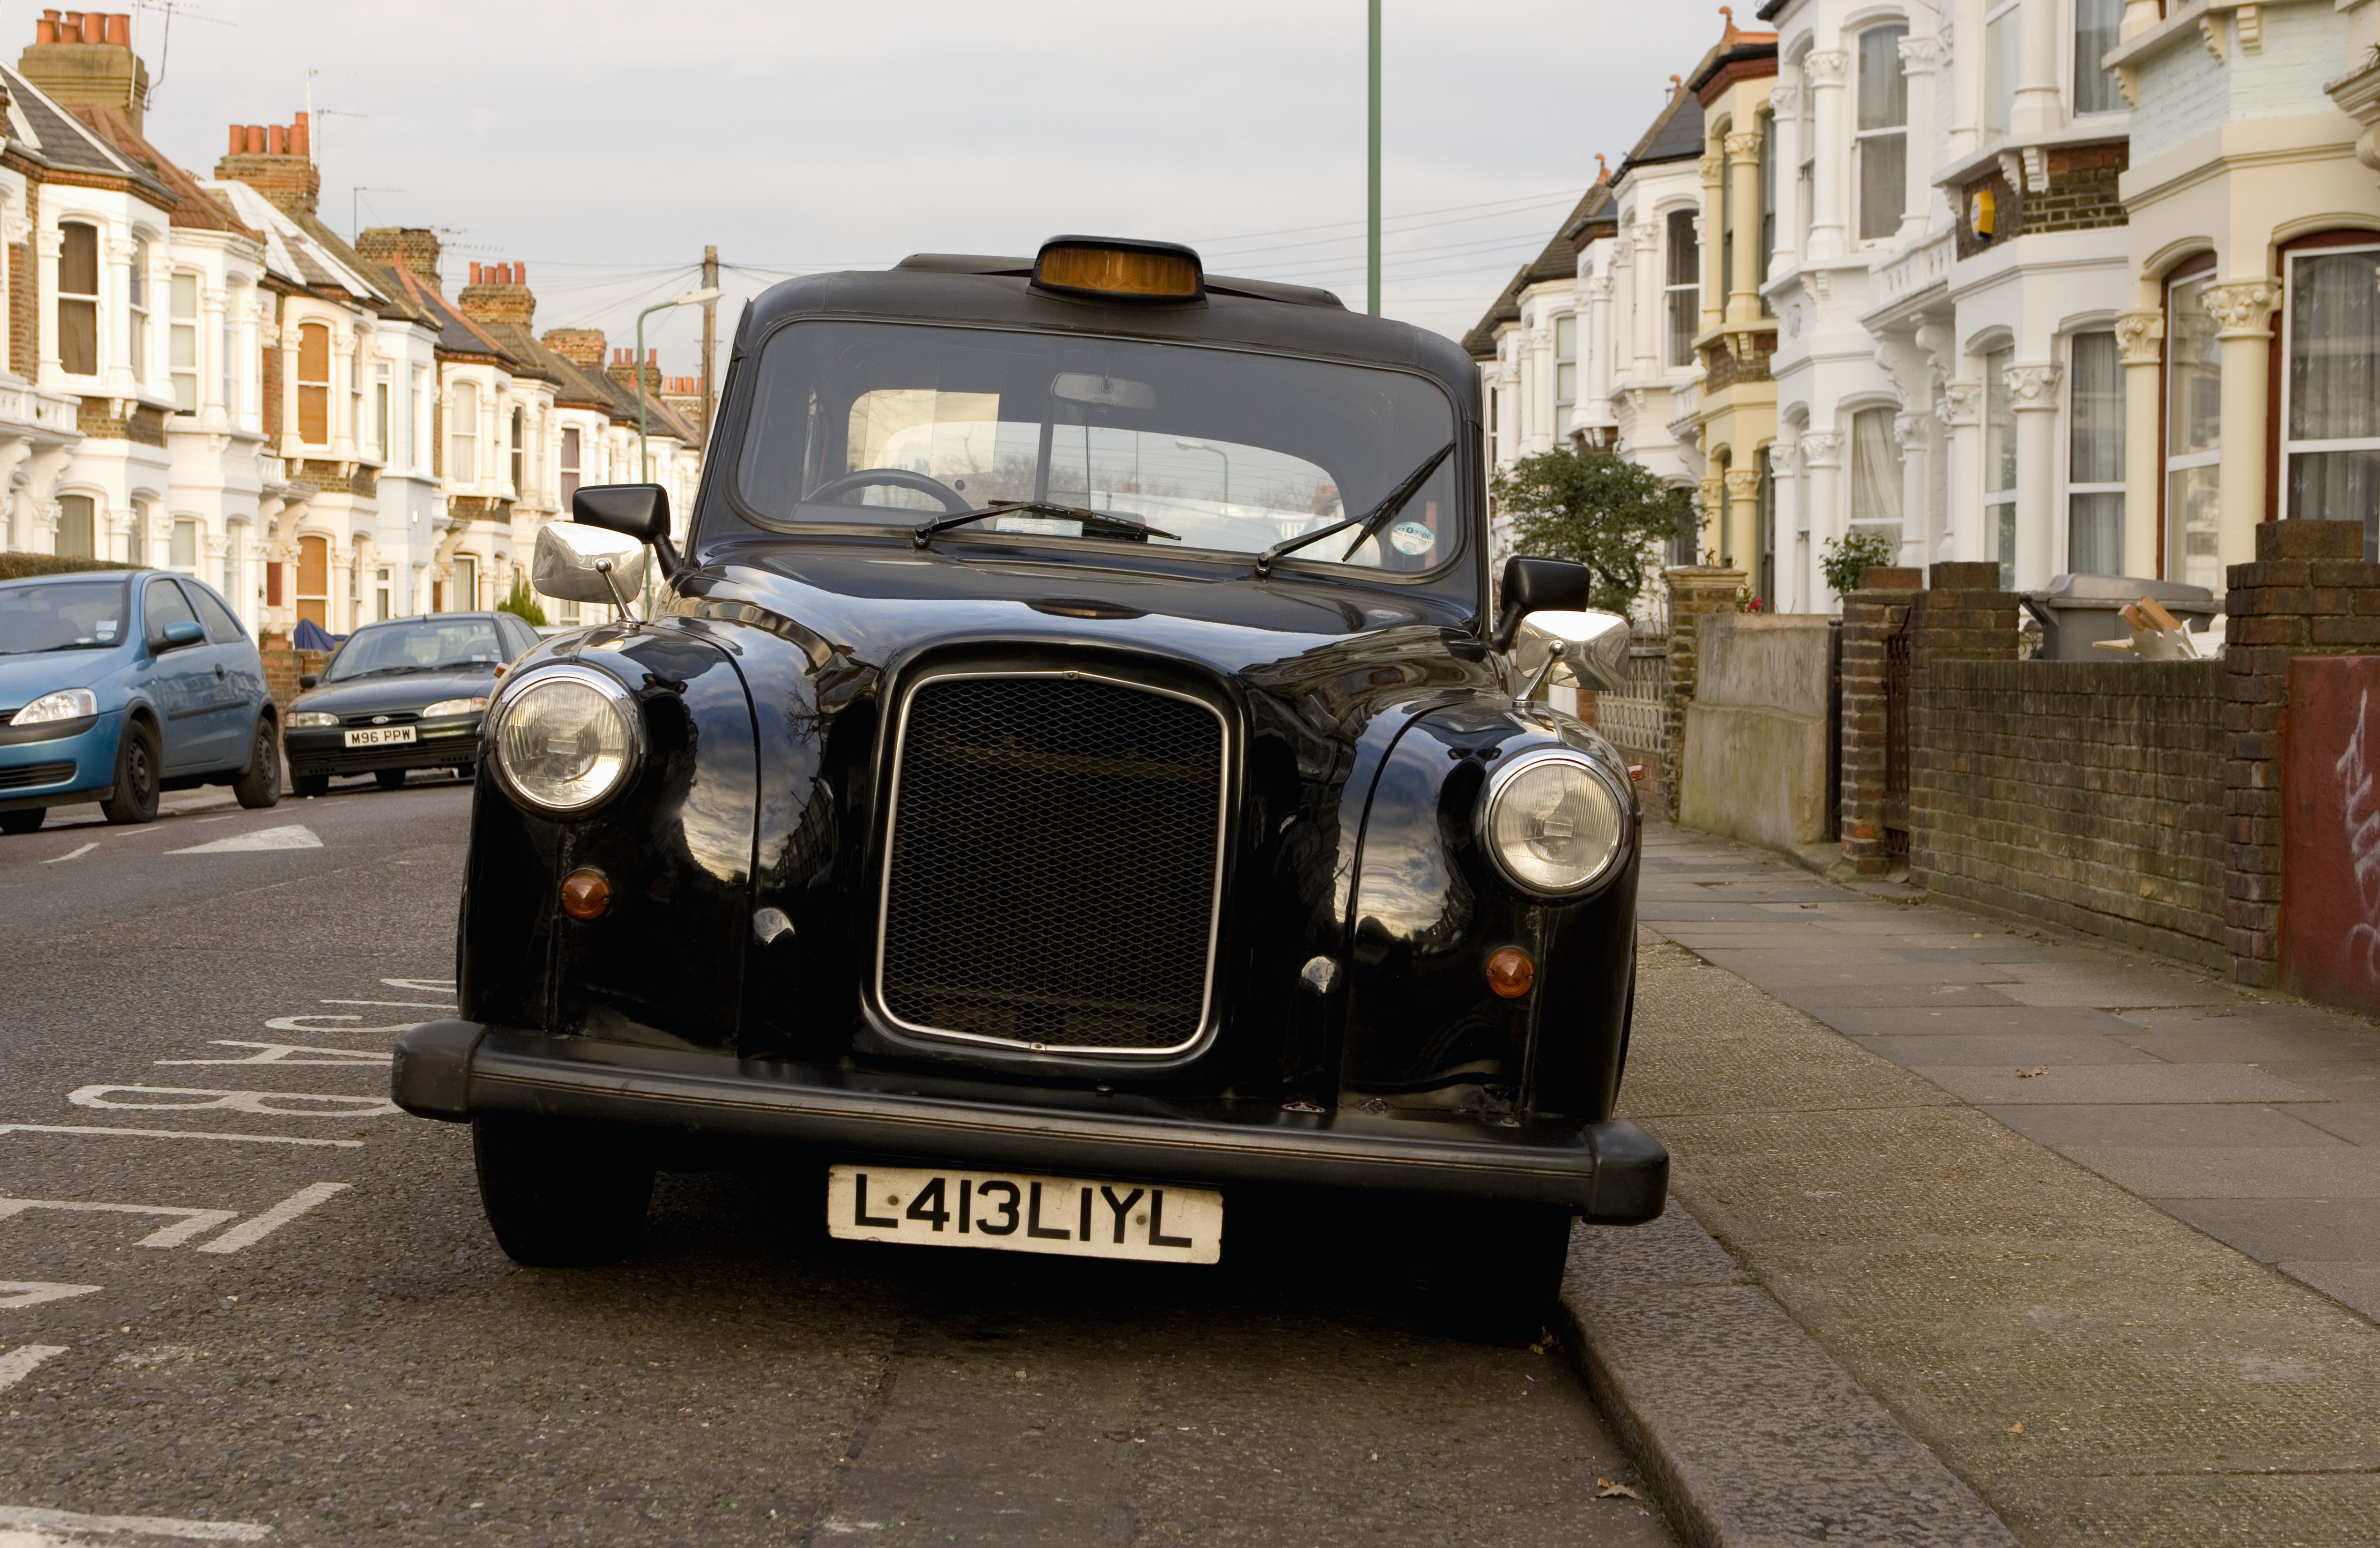 Black cab in London, England